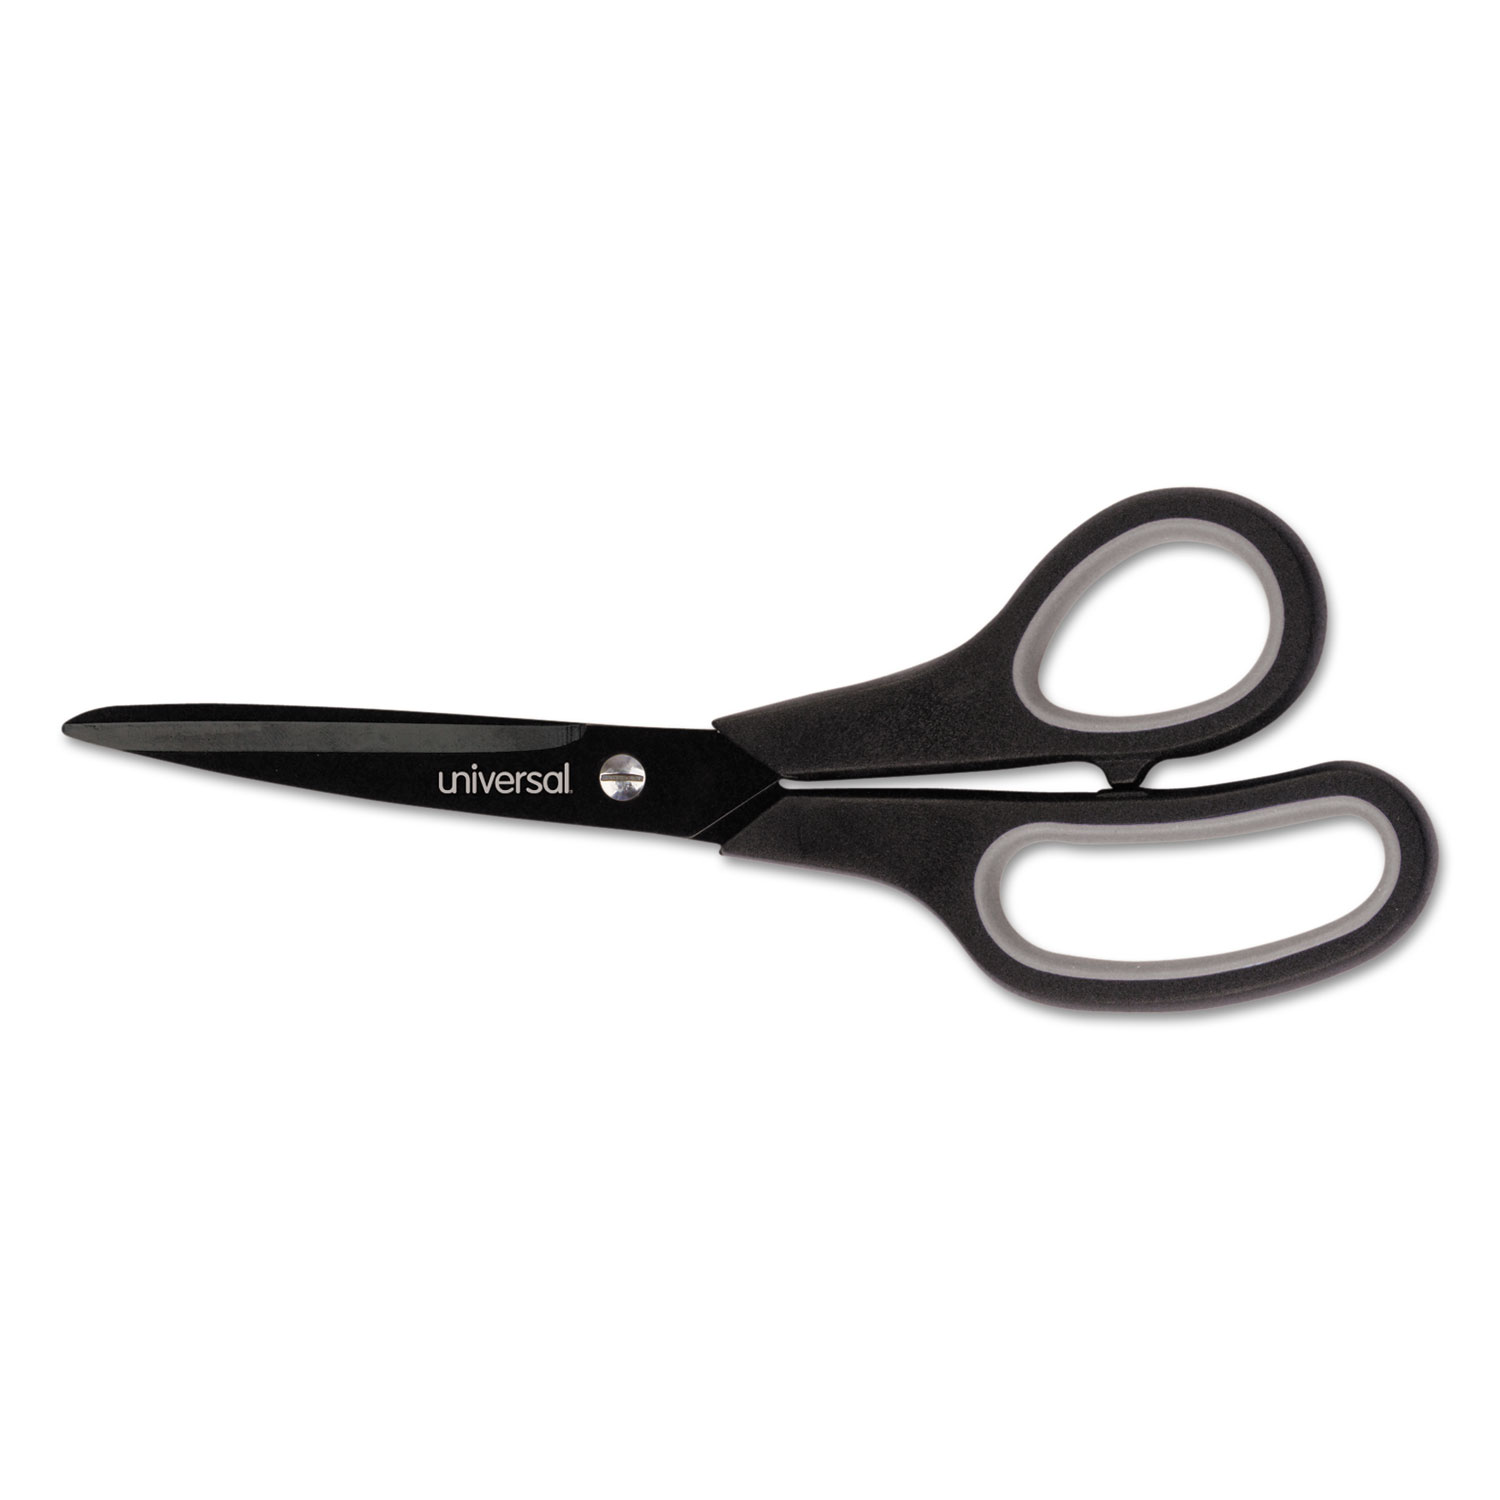  Universal UNV92021 Industrial Carbon Blade Scissors, 8 Long, 3.5 Cut Length, Black/Gray Straight Handle (UNV92021) 